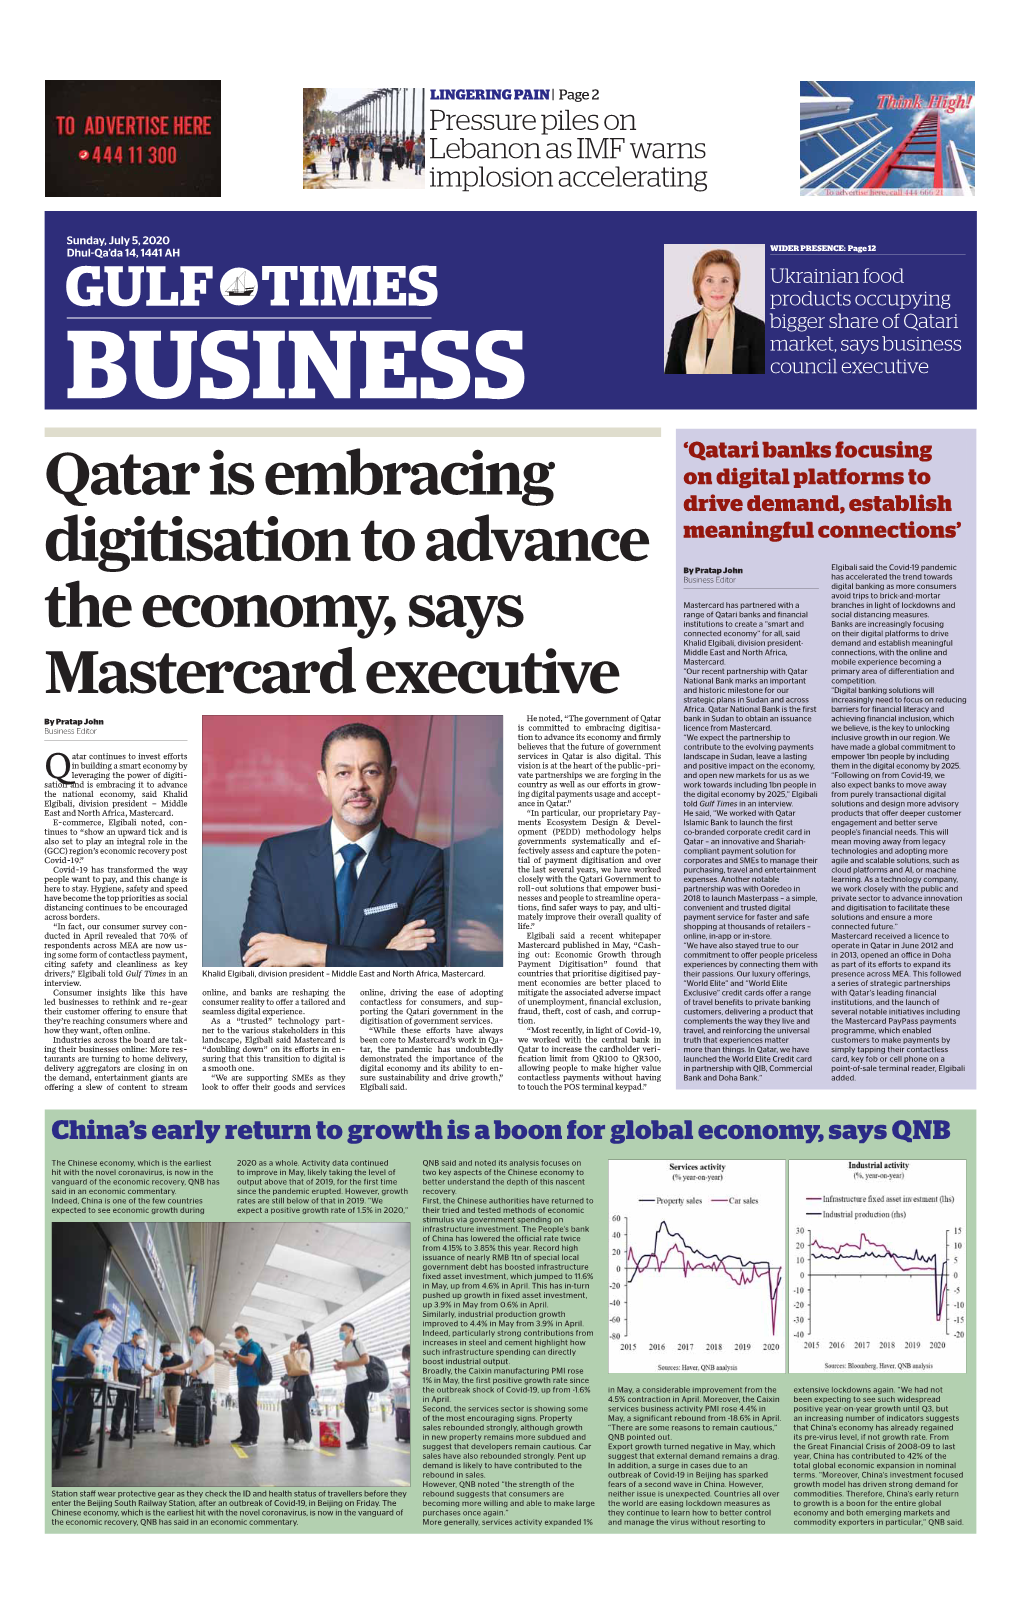 Qatar Is Embracing Digitisation to Advance the Economy, Says